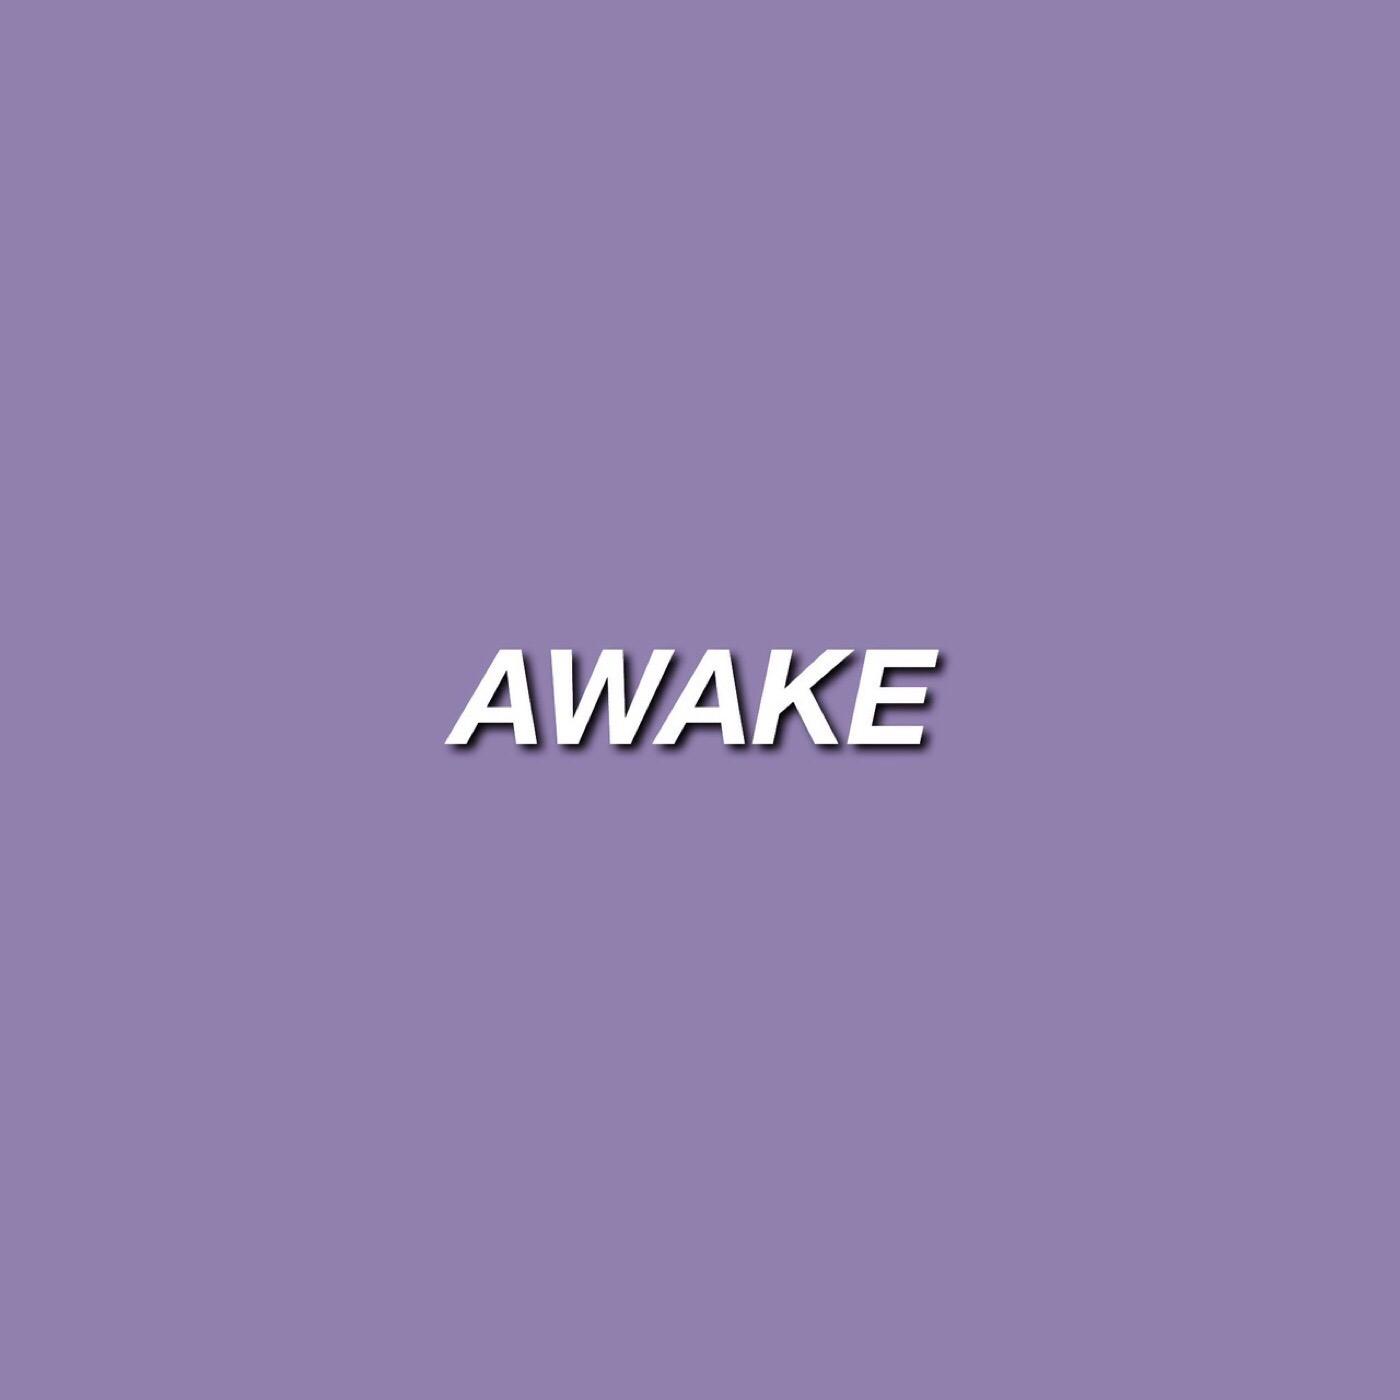 awaken you